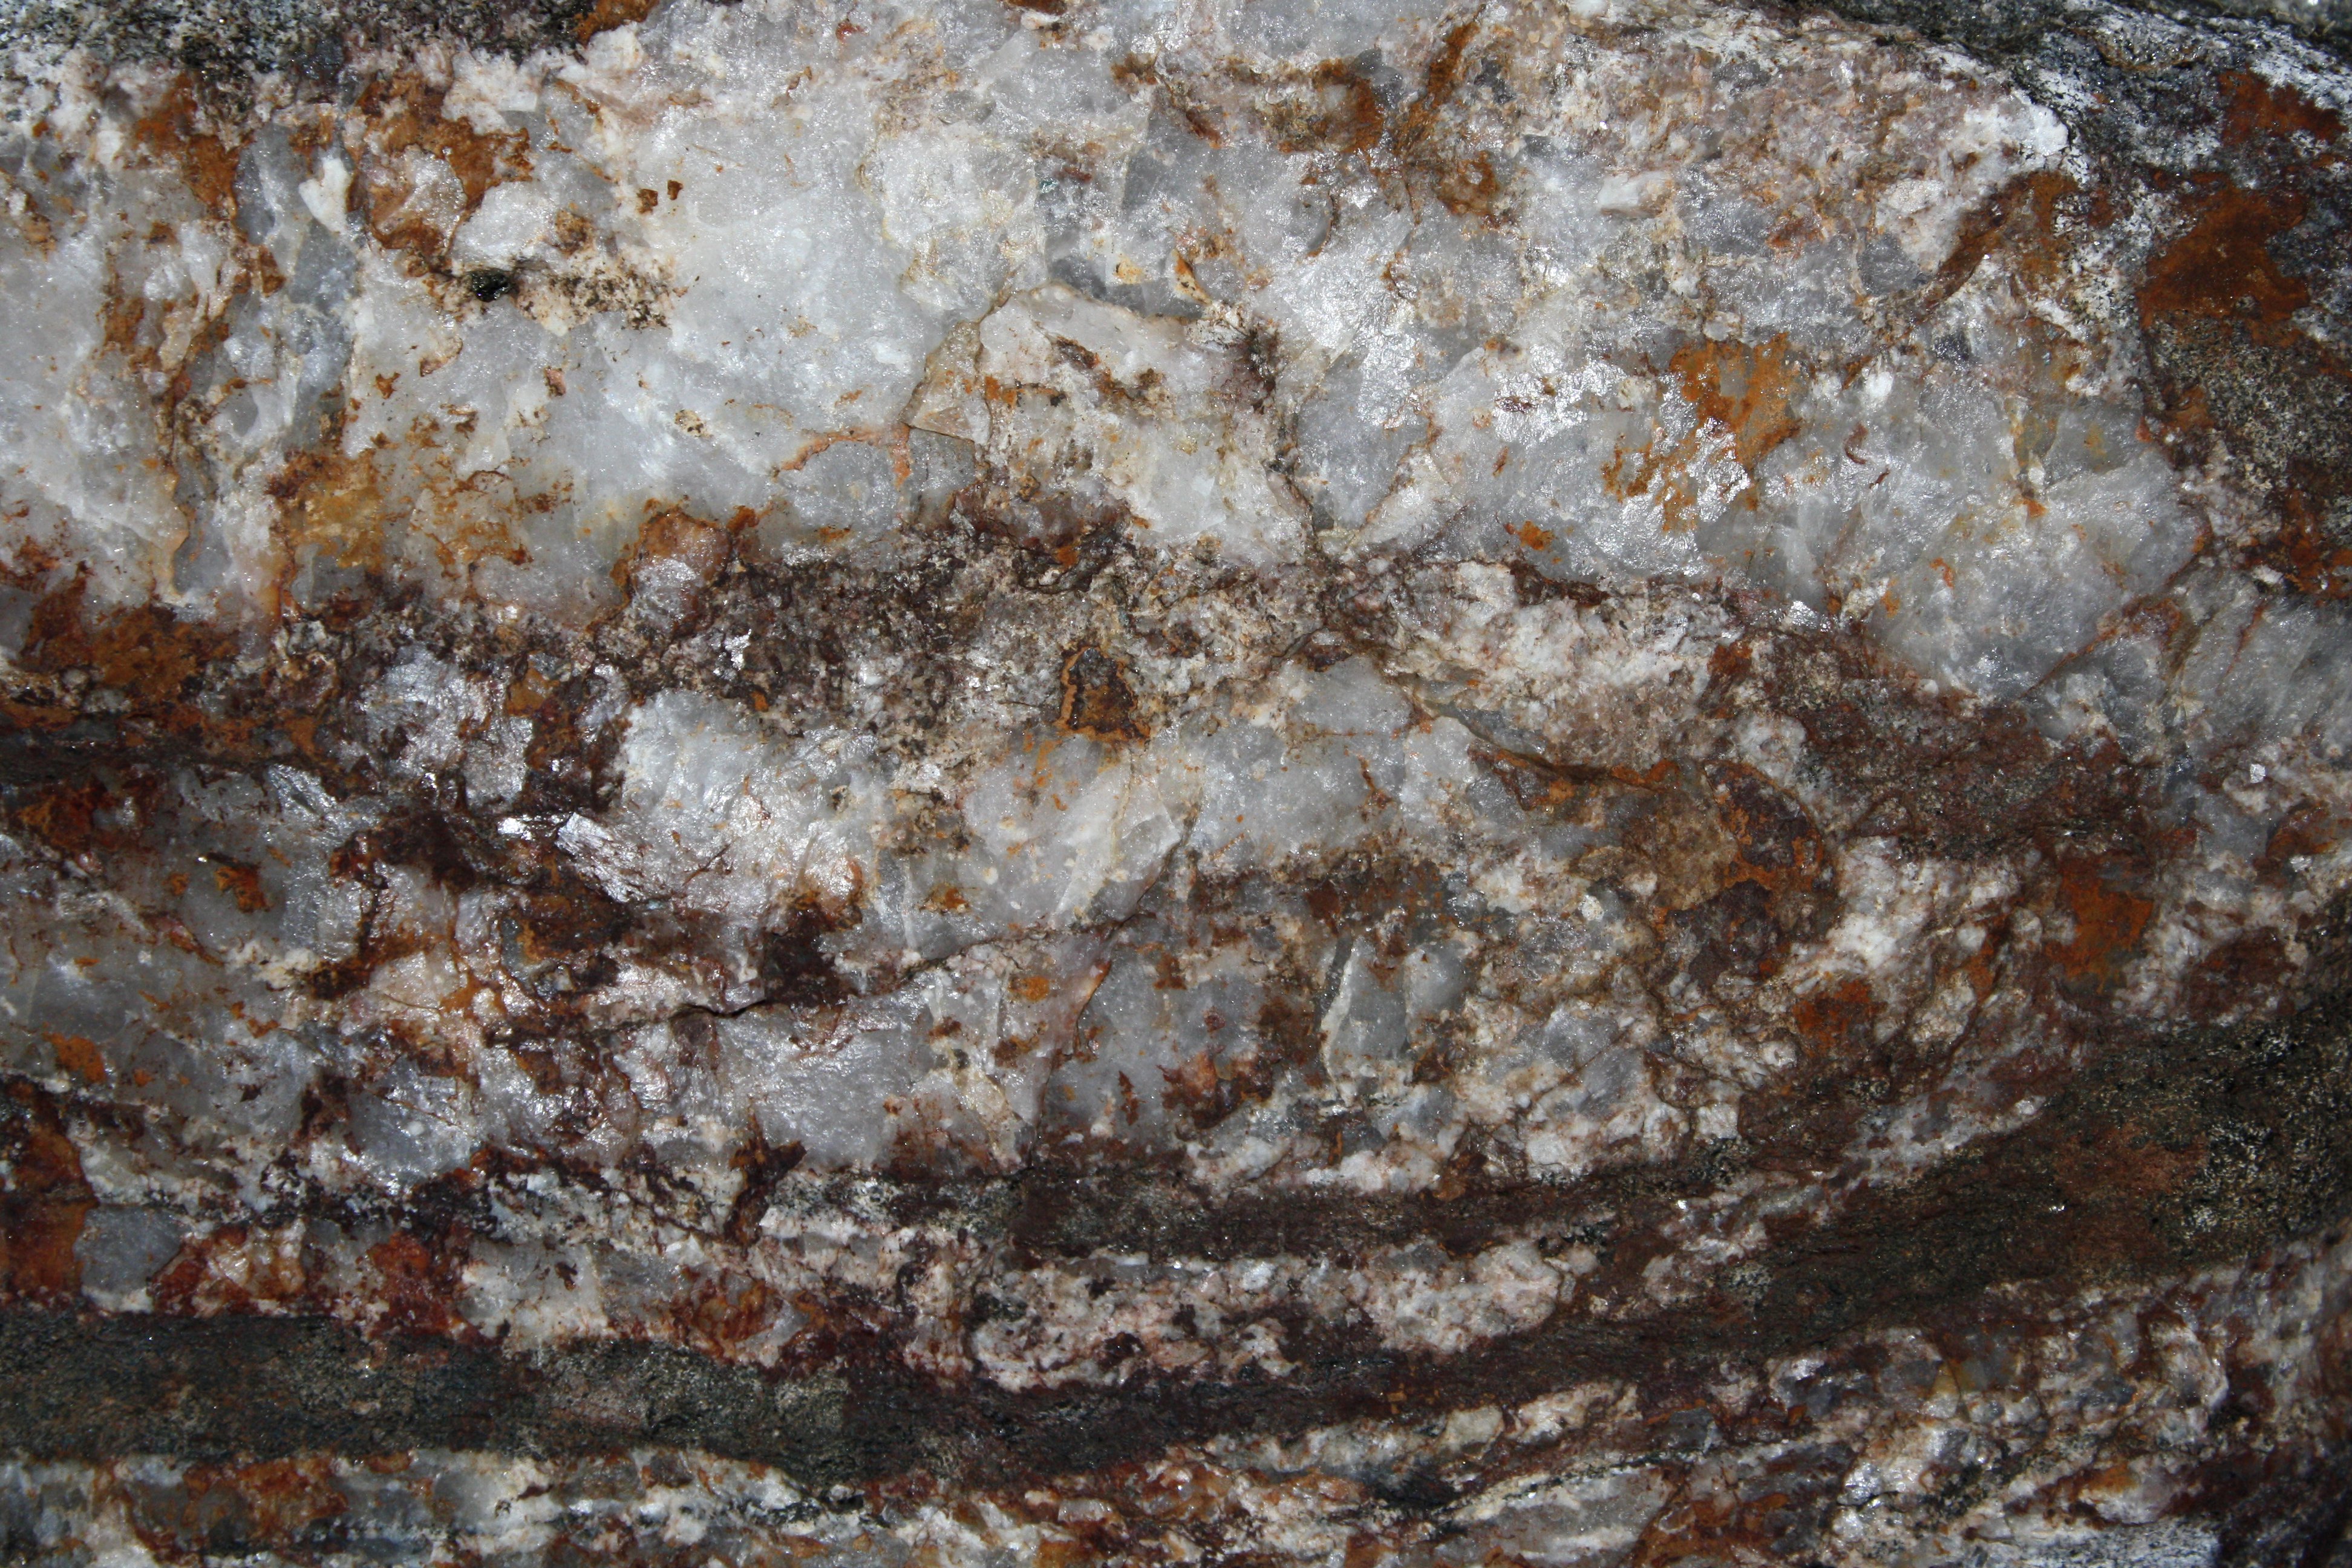 White Quartz Rock Texture with Hematite Iron Rust Stains Picture ...